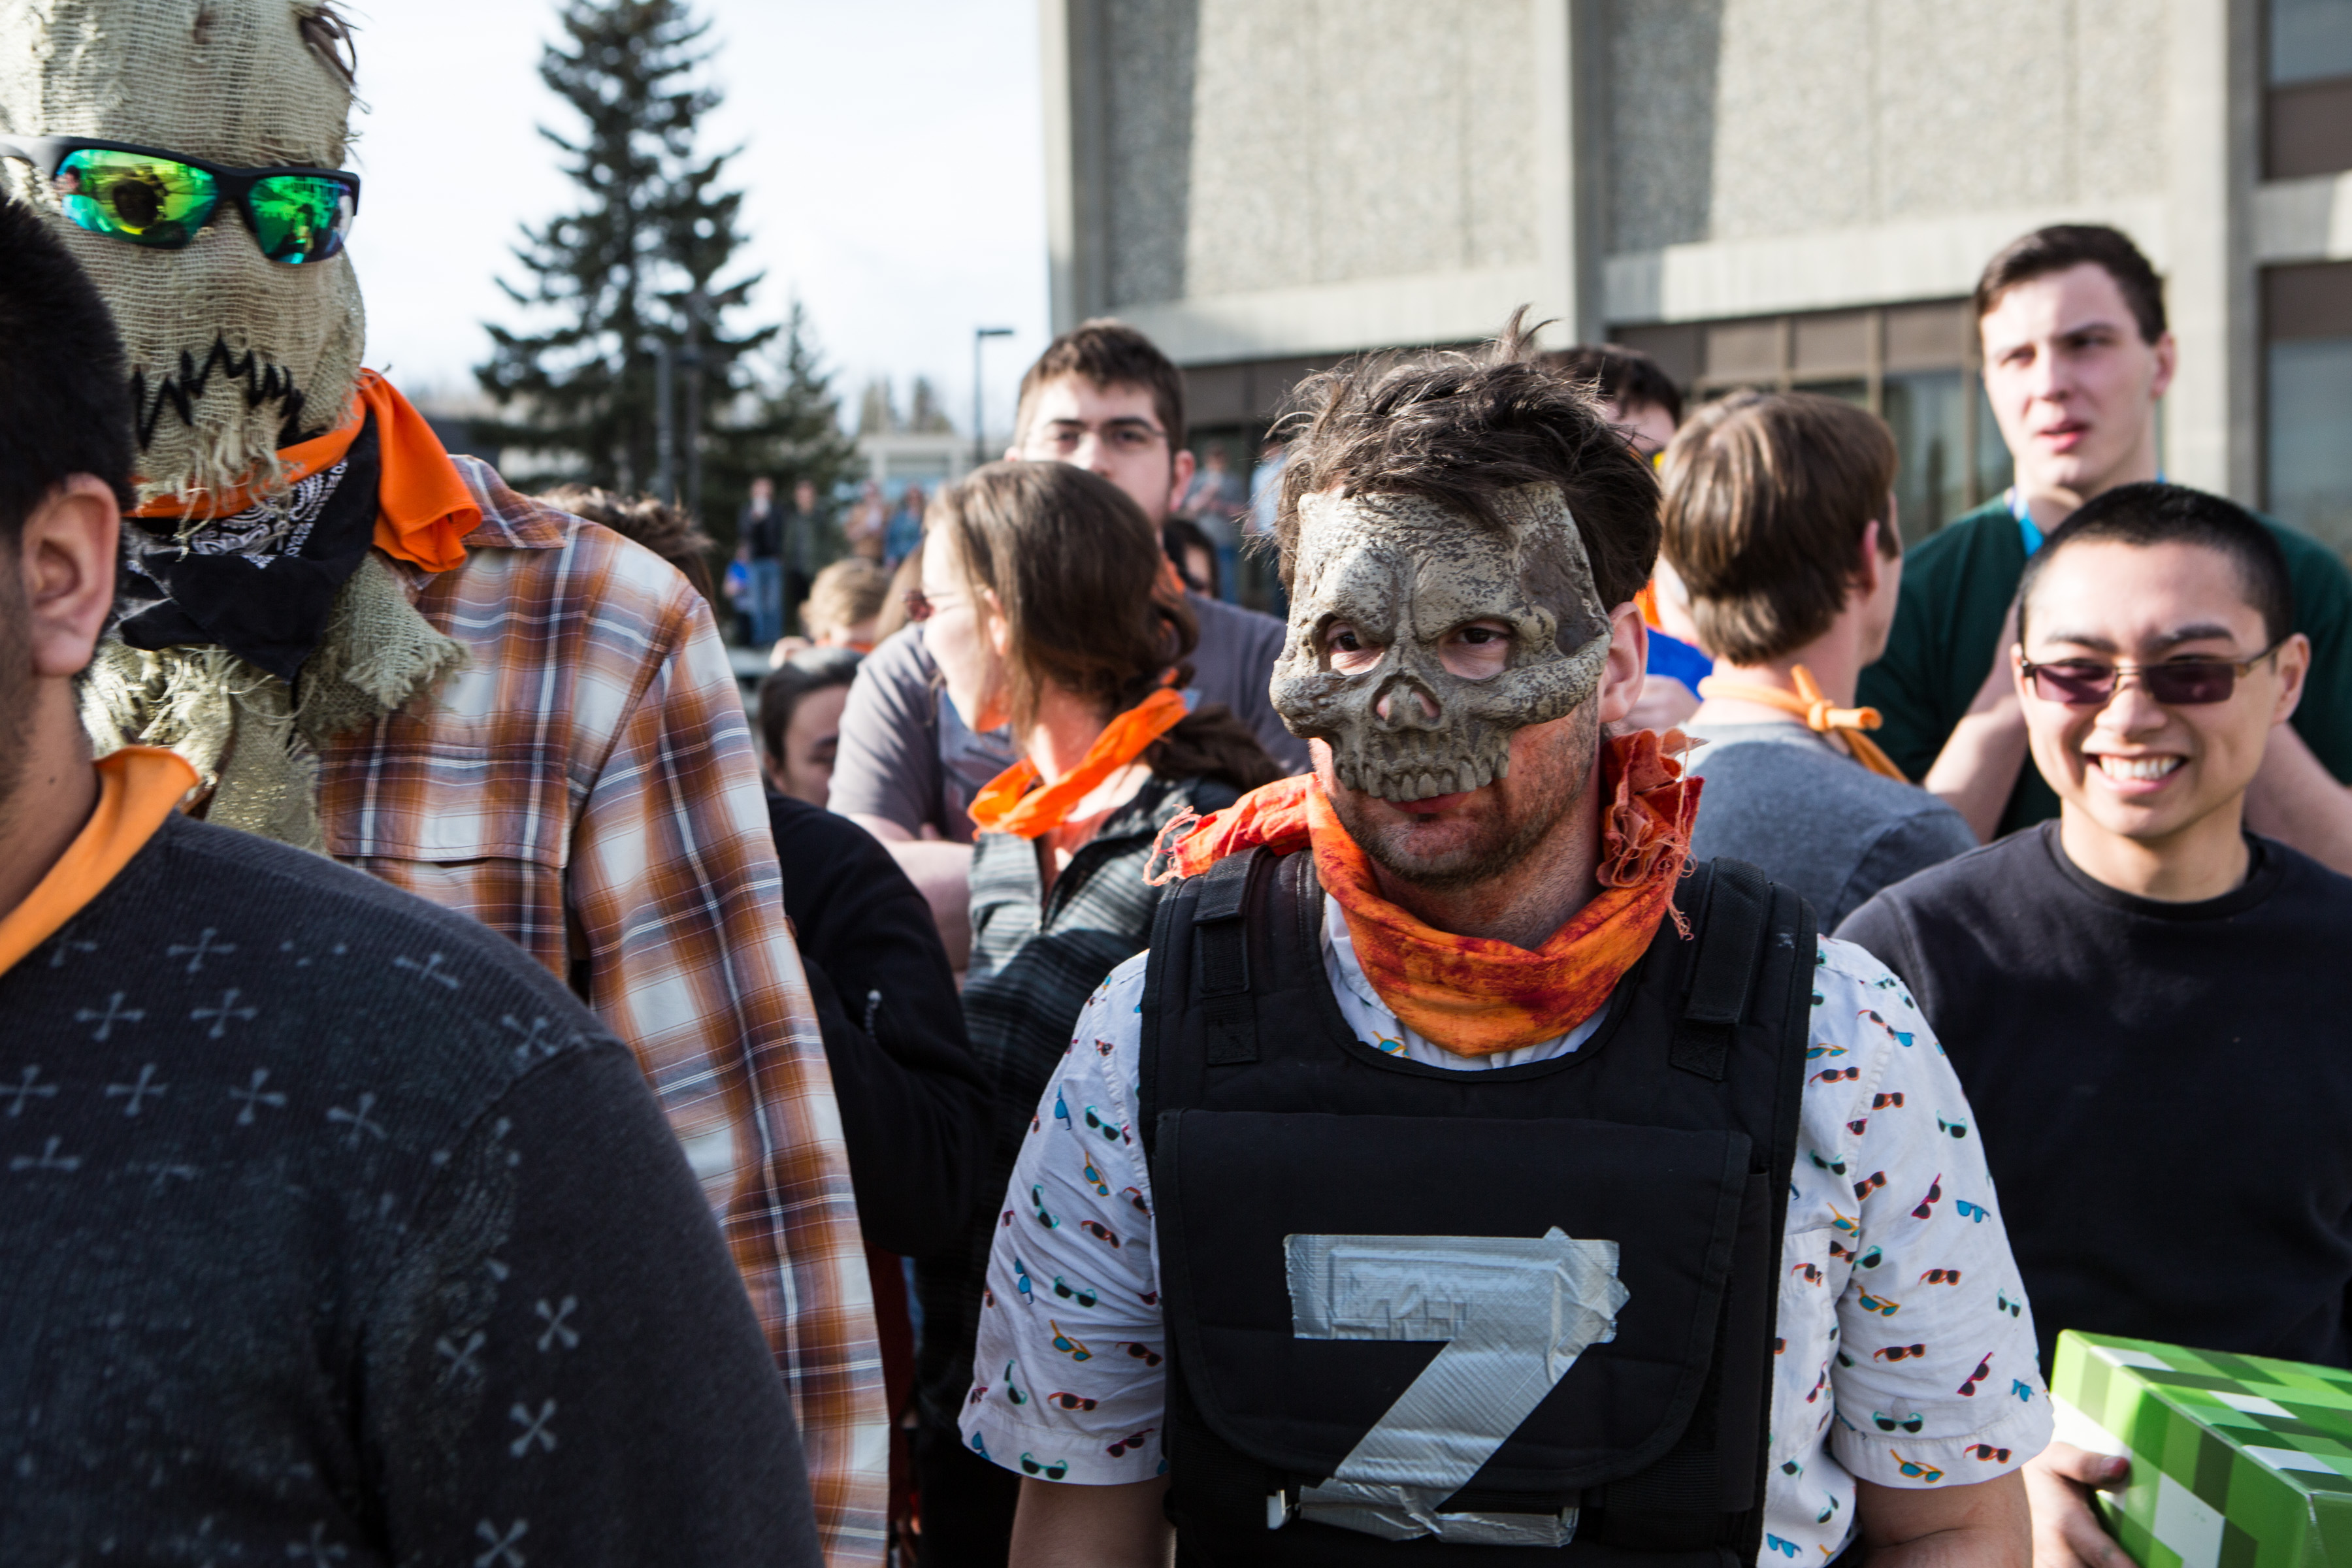 Zombie wars on campus